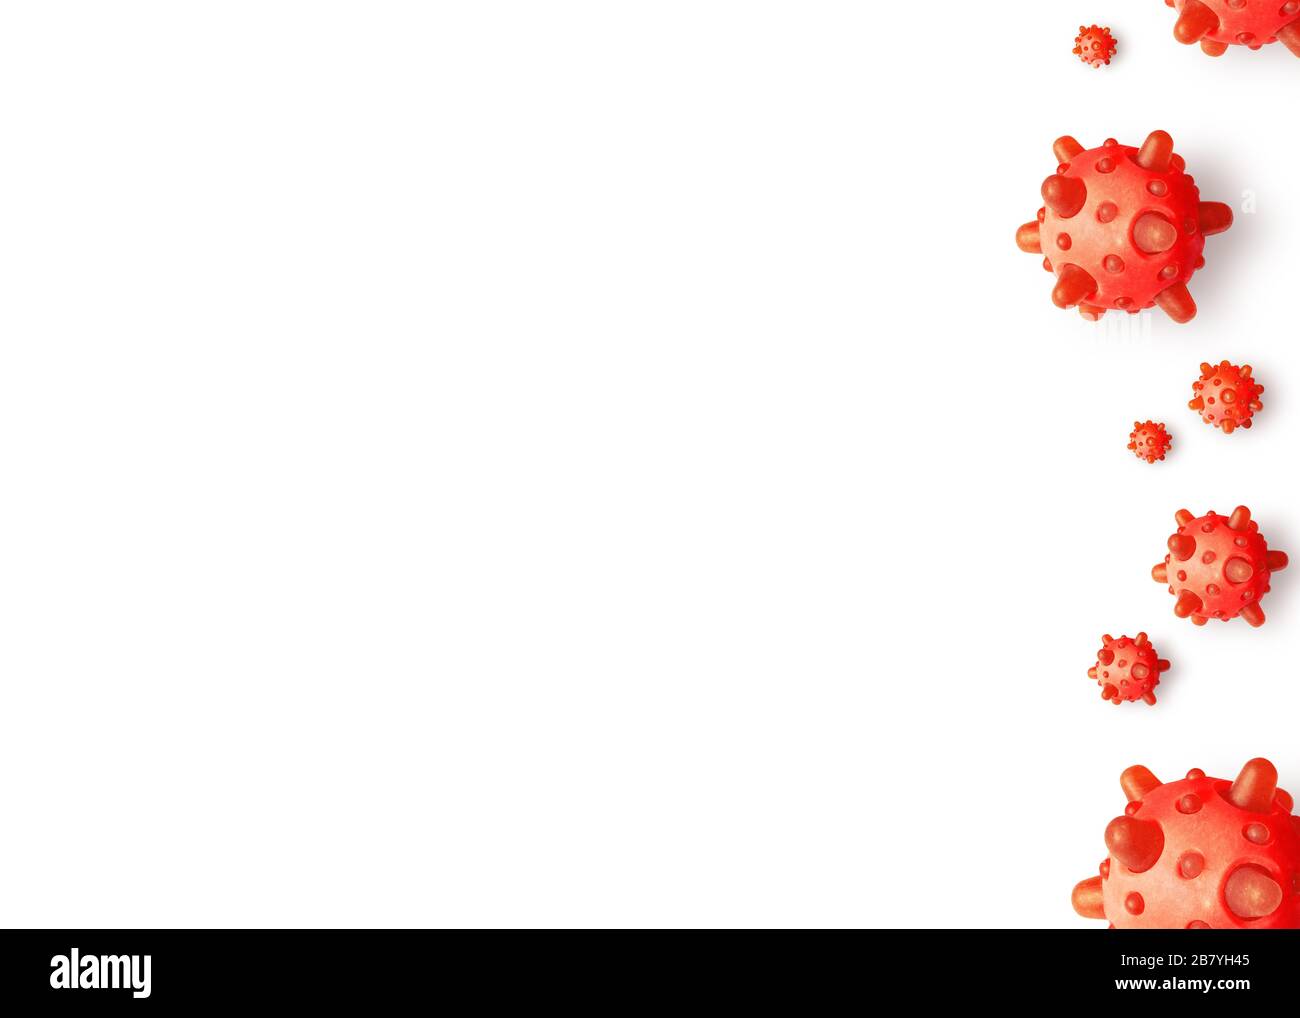 COVID-19 coronavirus theme for background, 3d illustration. SARS-CoV-2 coronavirus global outbreak. Banner with red corona viruses isolated on white b Stock Photo